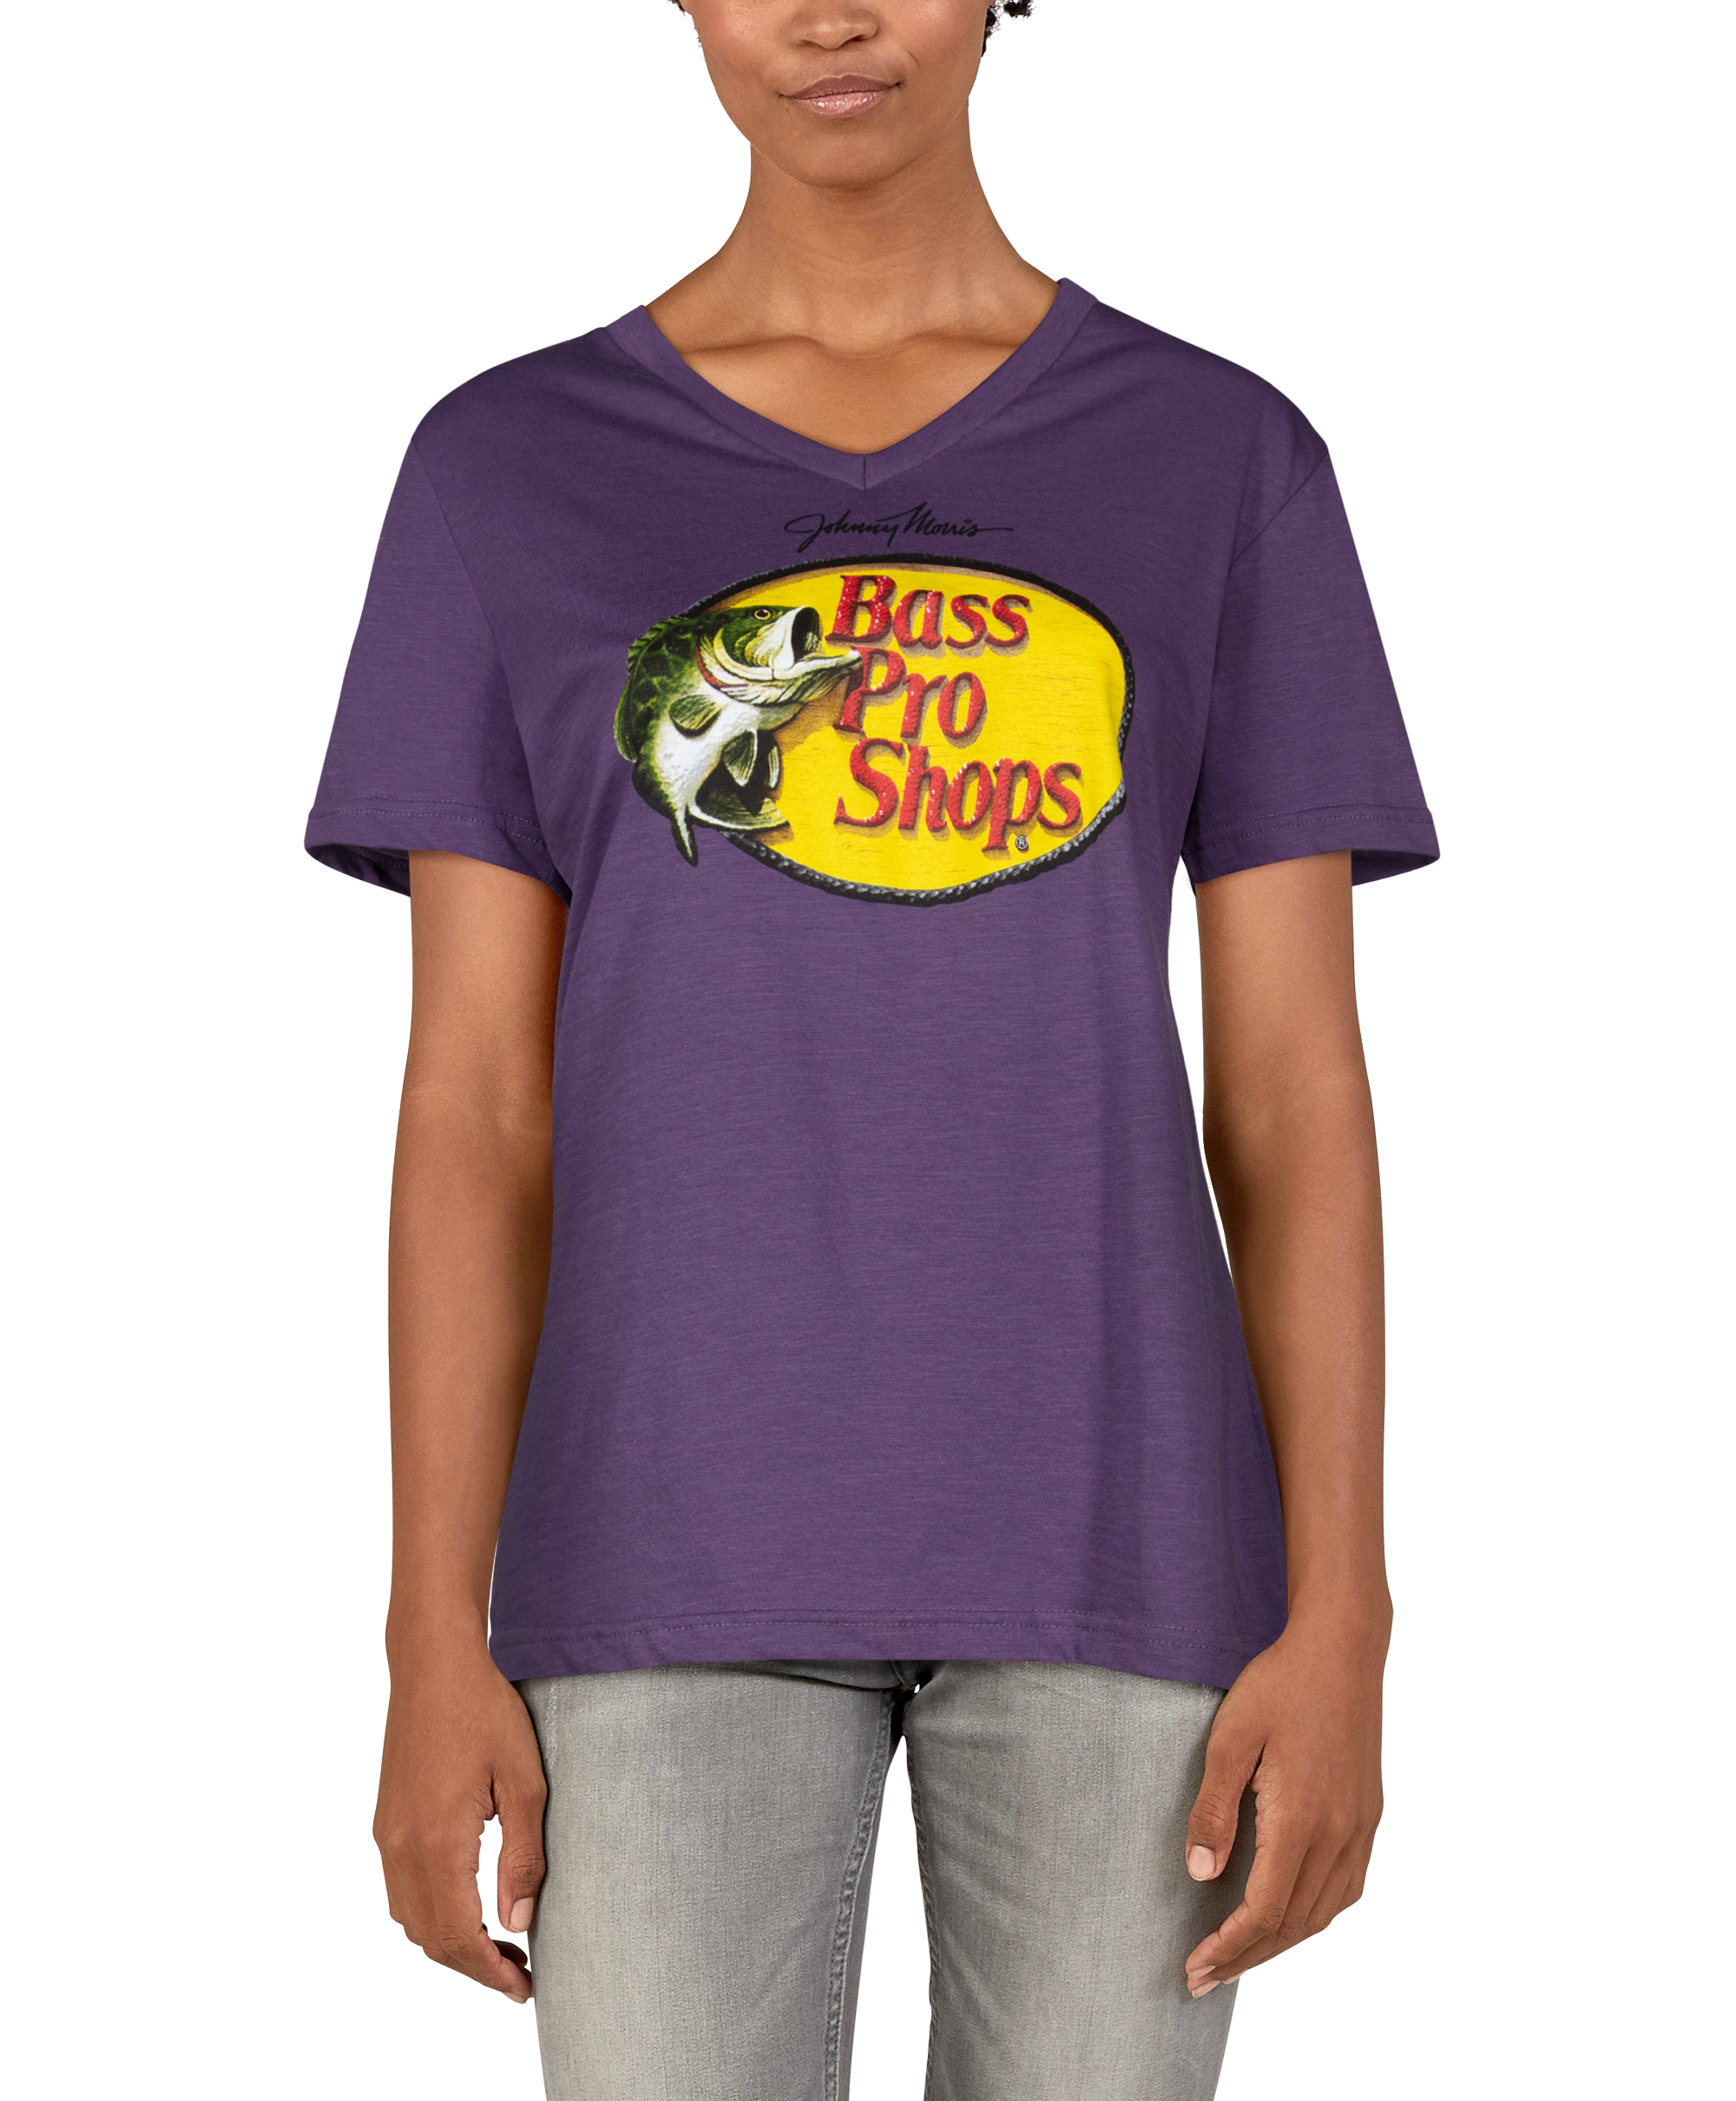 Bass Pro Shops Woodcut Logo V-Neck Short-Sleeve T-Shirt for Ladies - Purple - M